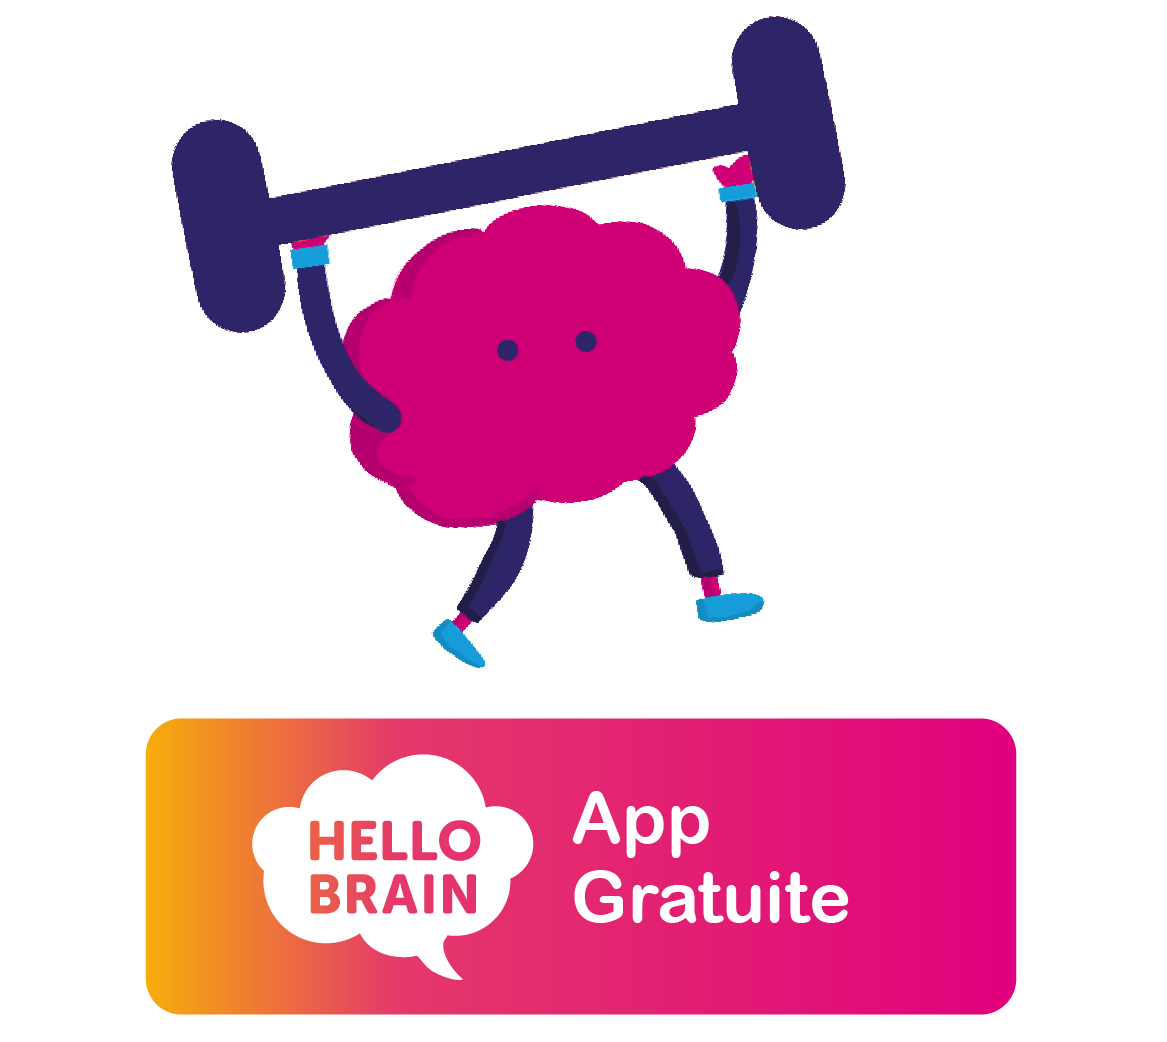 Hello Brain. App Gratuite.